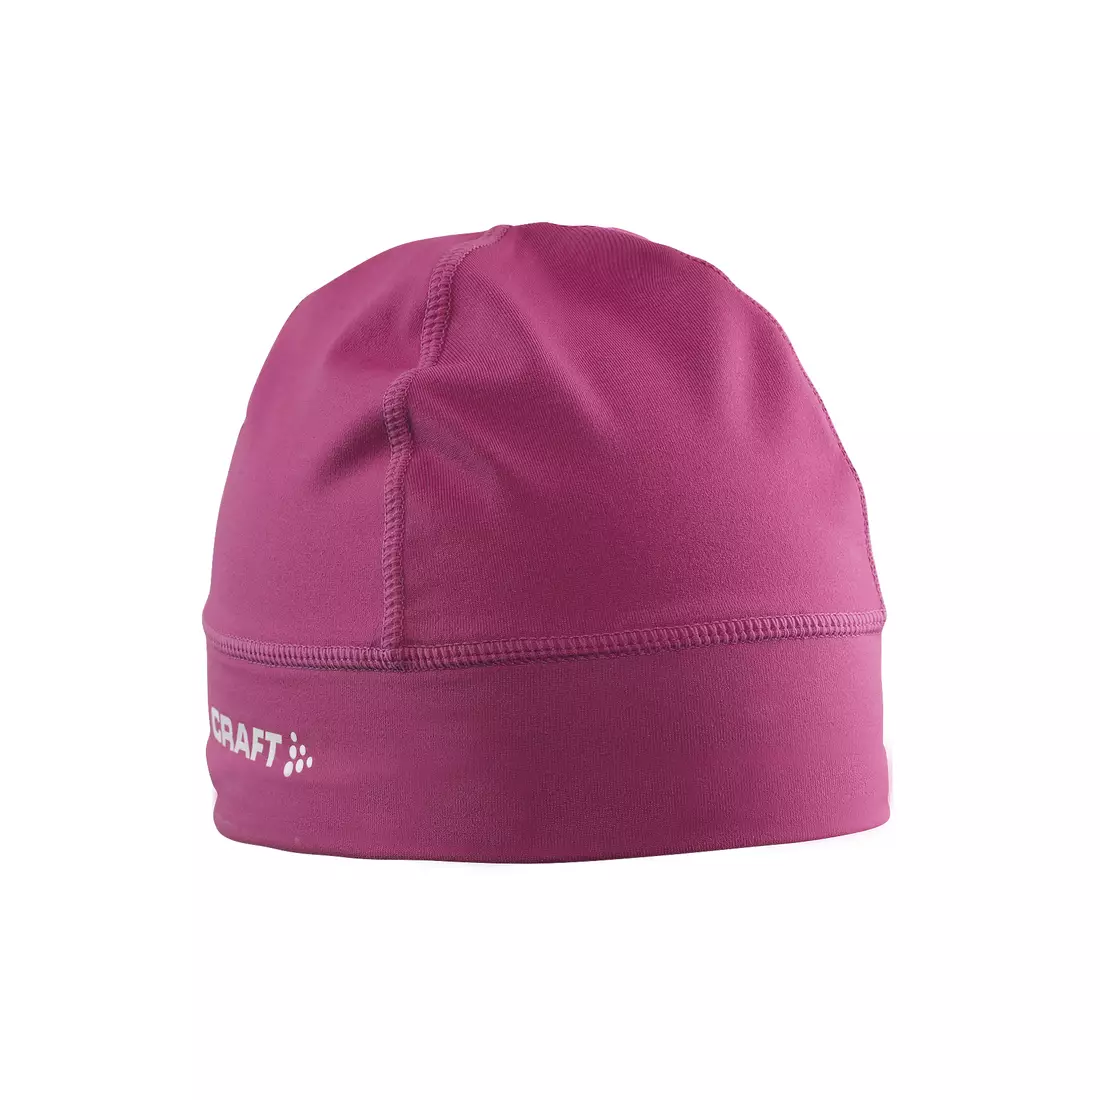 CRAFT XC thermal hat 1902362-1403